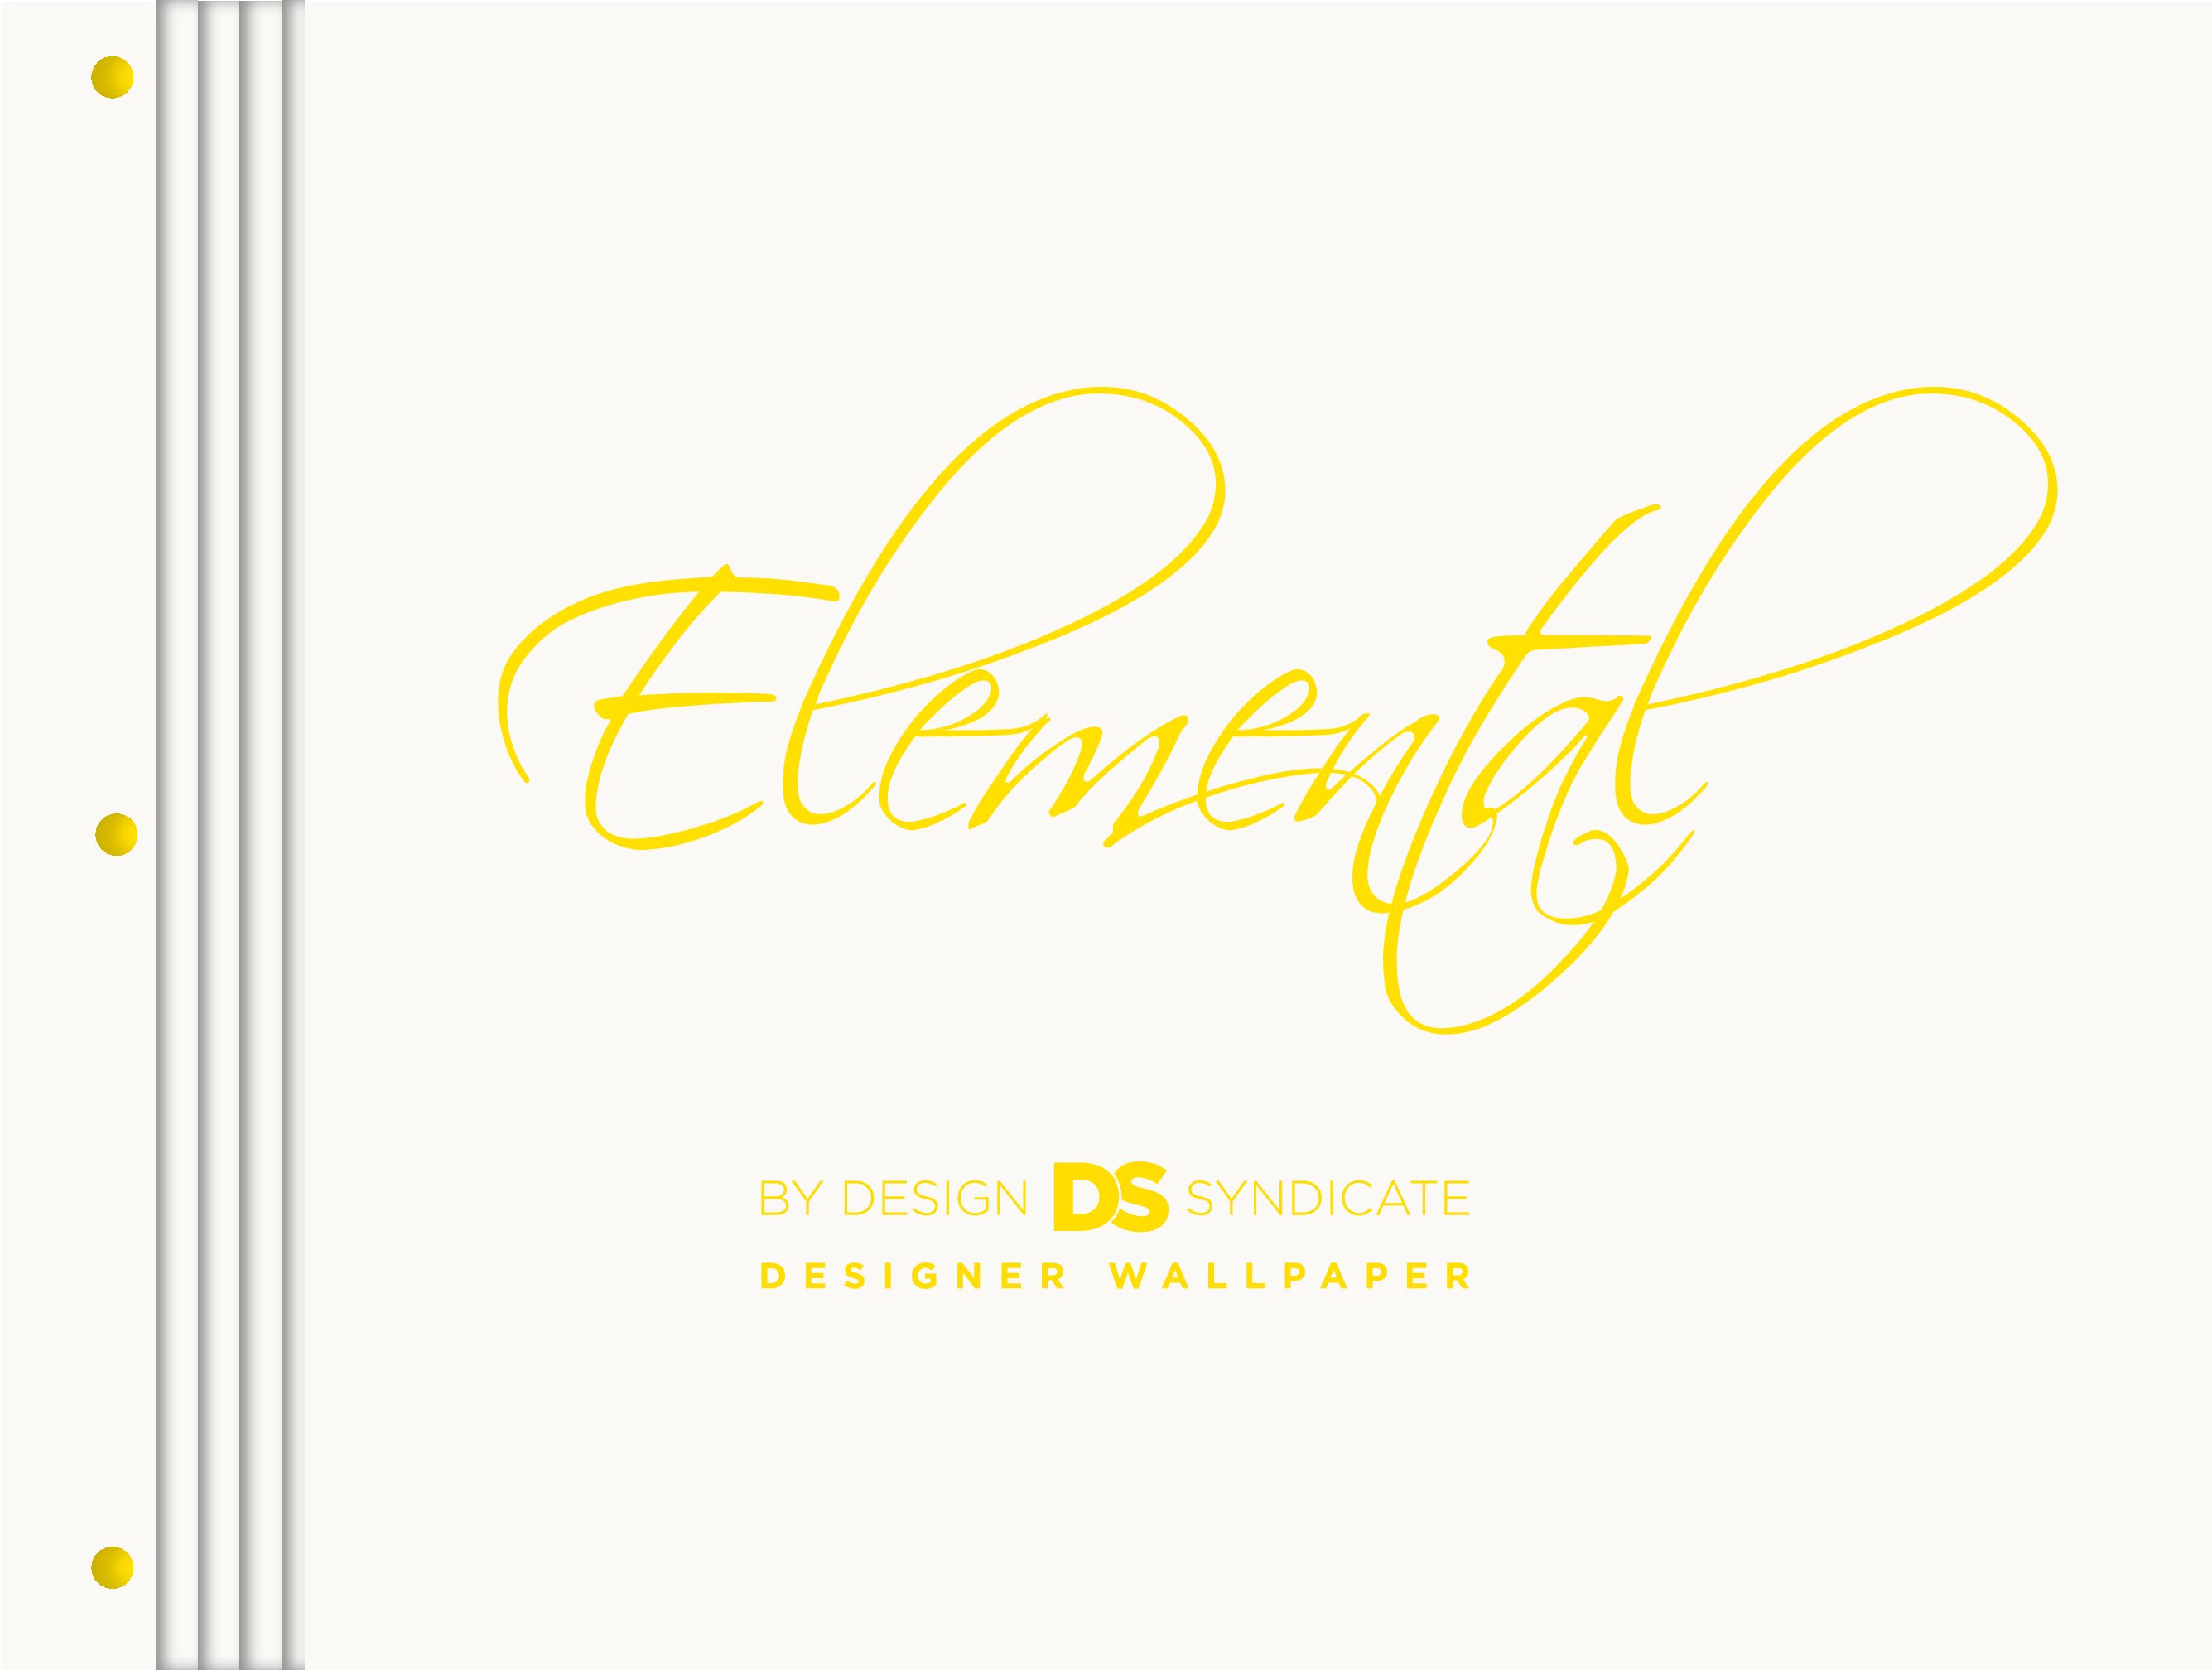 Design Syndicate Elemental Issuu